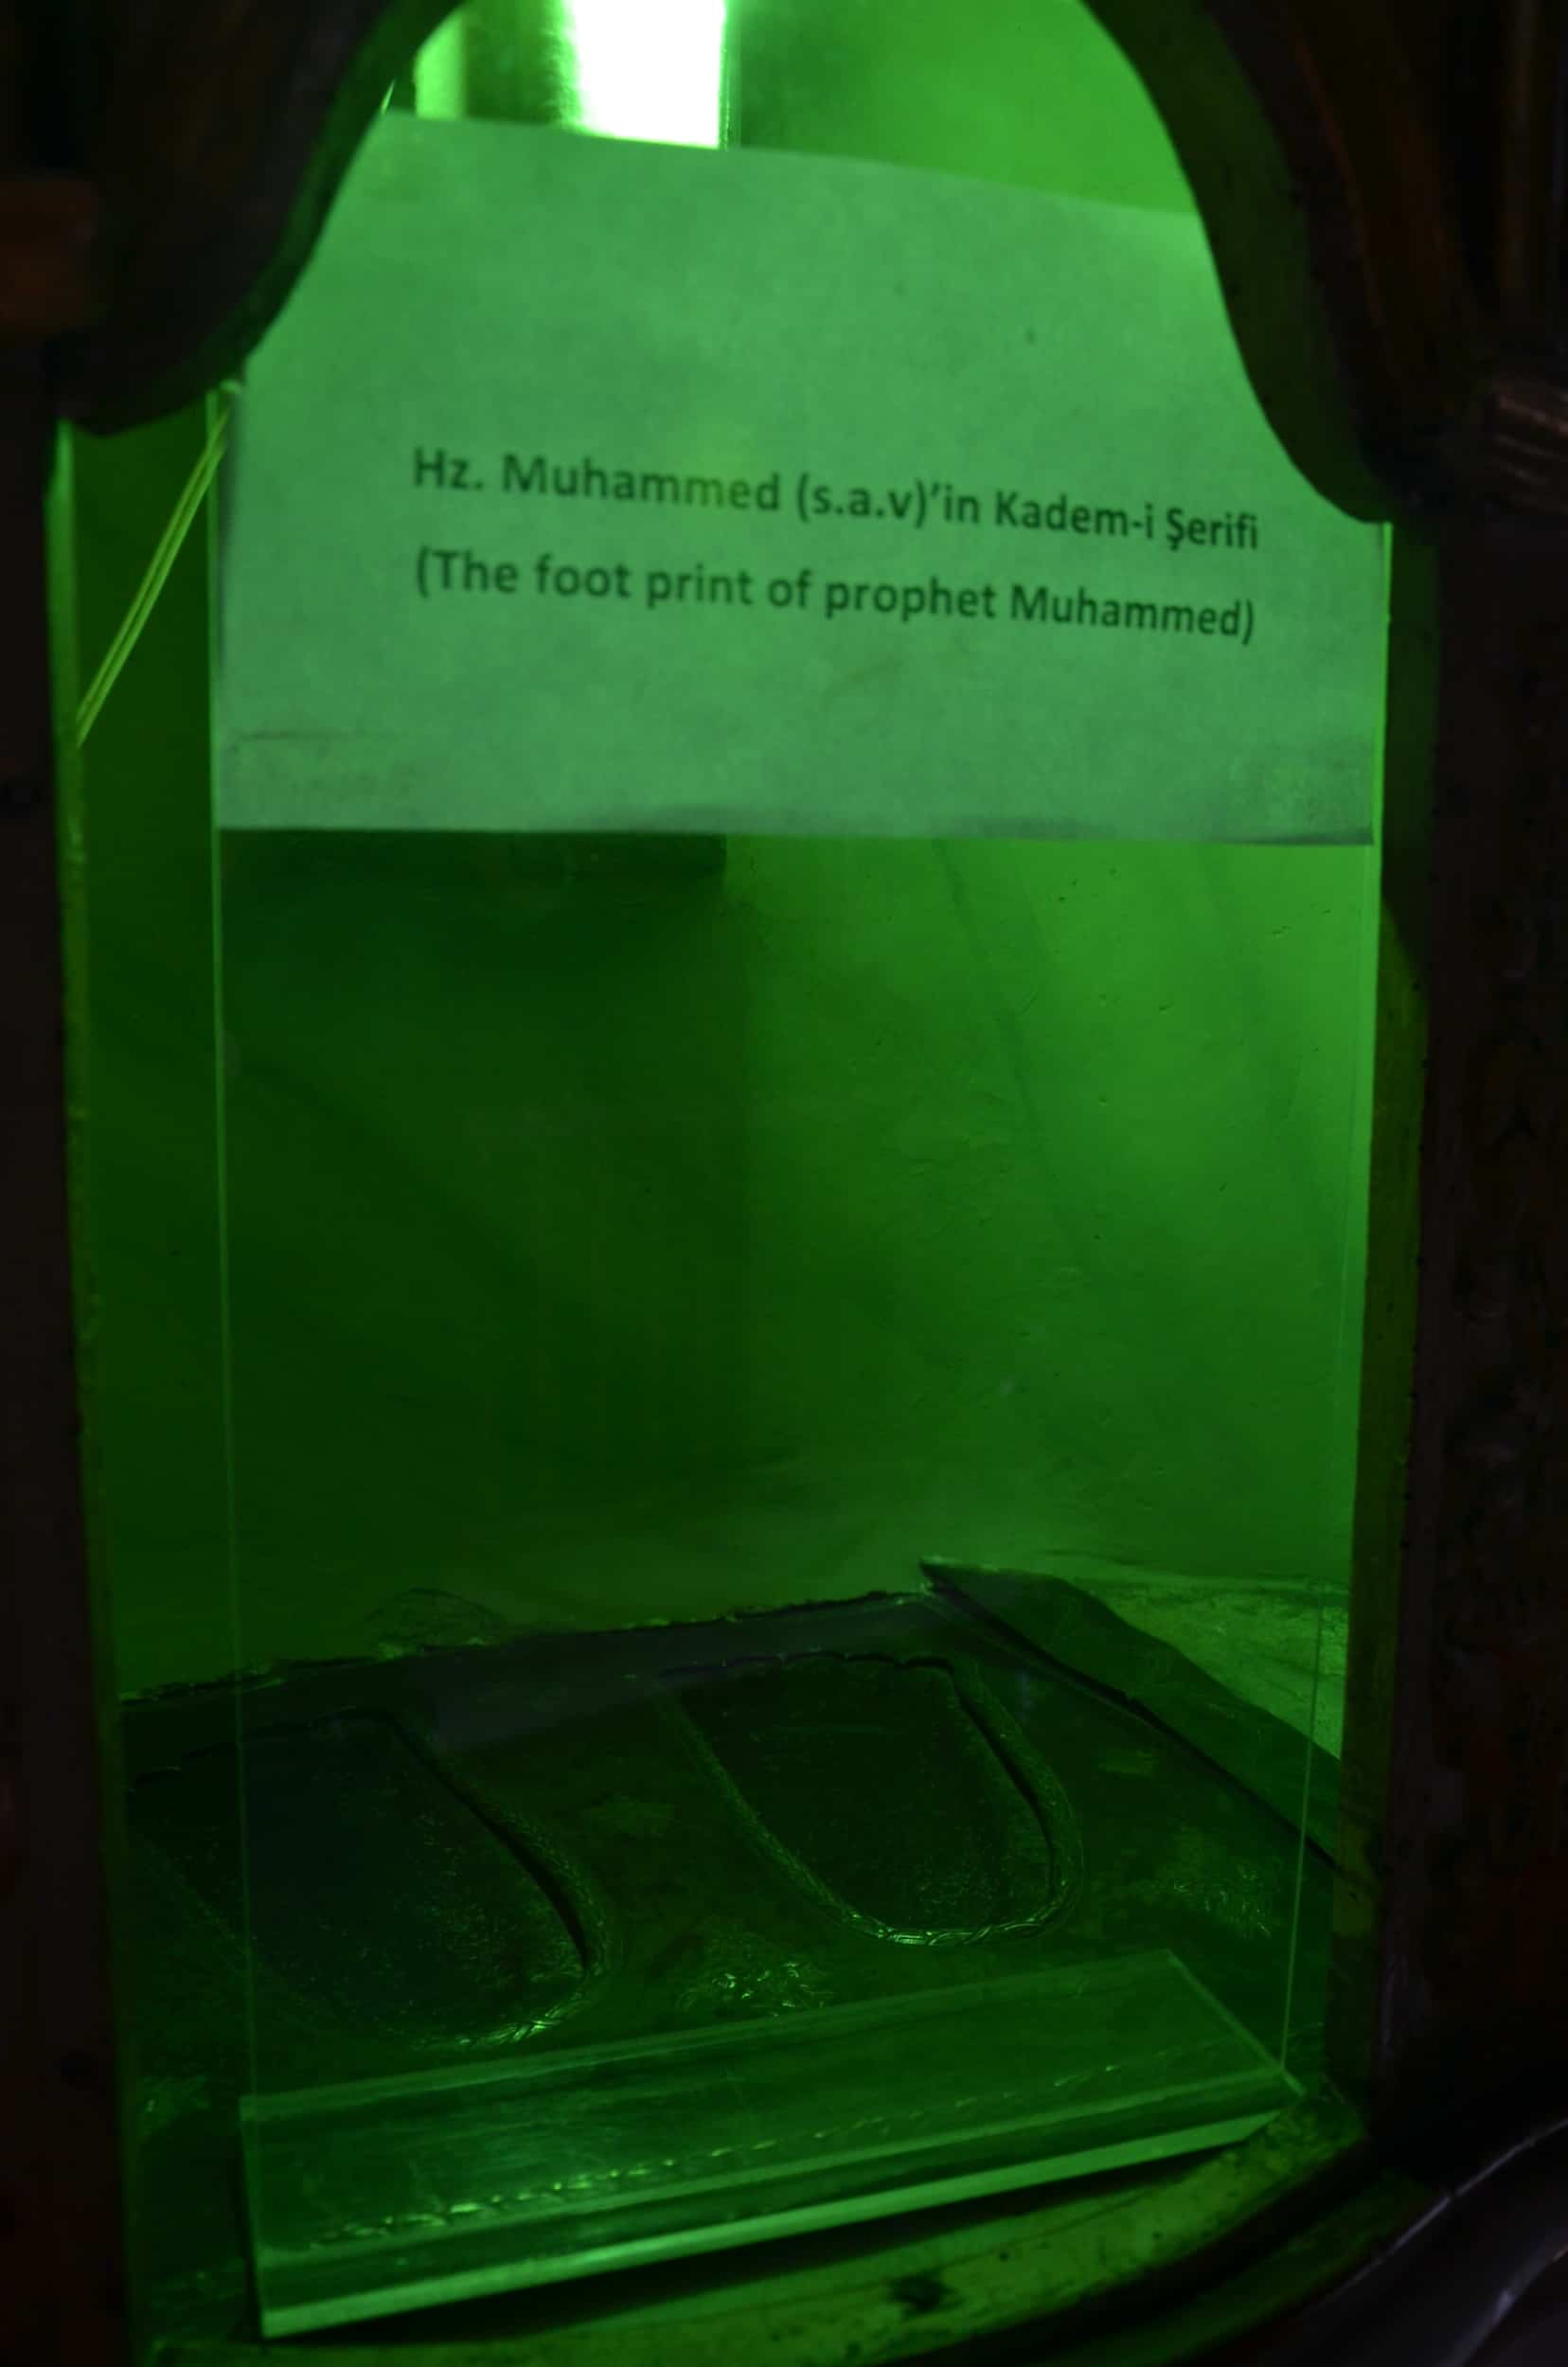 Footprint of the Prophet Muhammad at the Tomb of Mustafa III